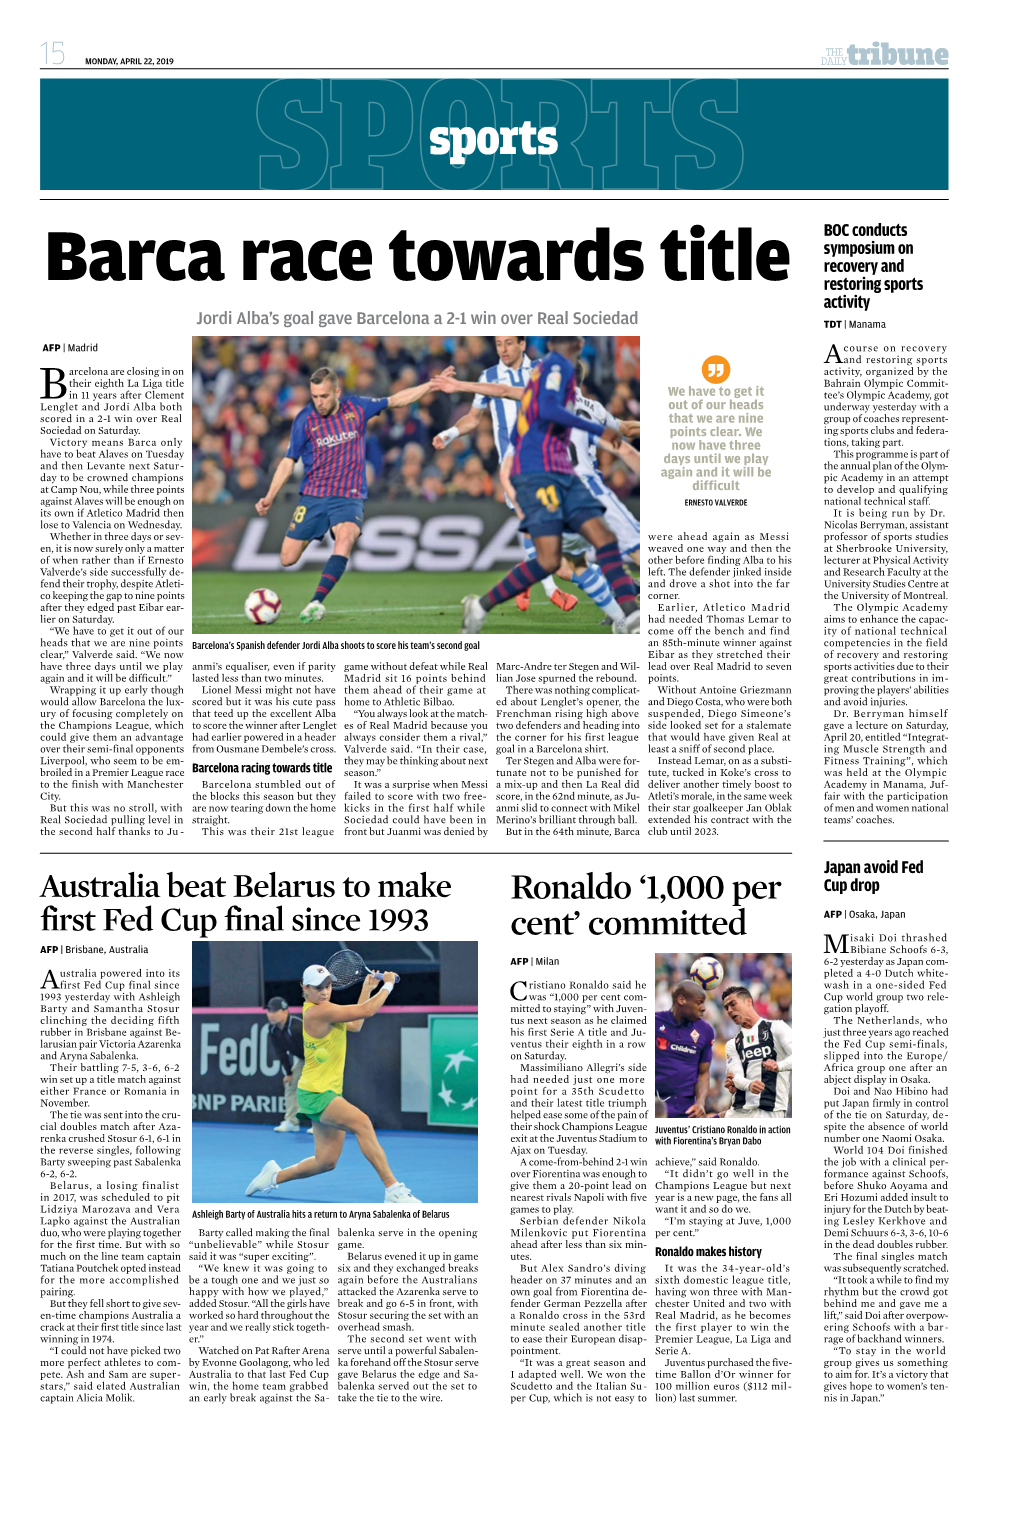 Barca Race Towards Title Restoring Sports Activity Jordi Alba’S Goal Gave Barcelona a 2-1 Win Over Real Sociedad TDT | Manama